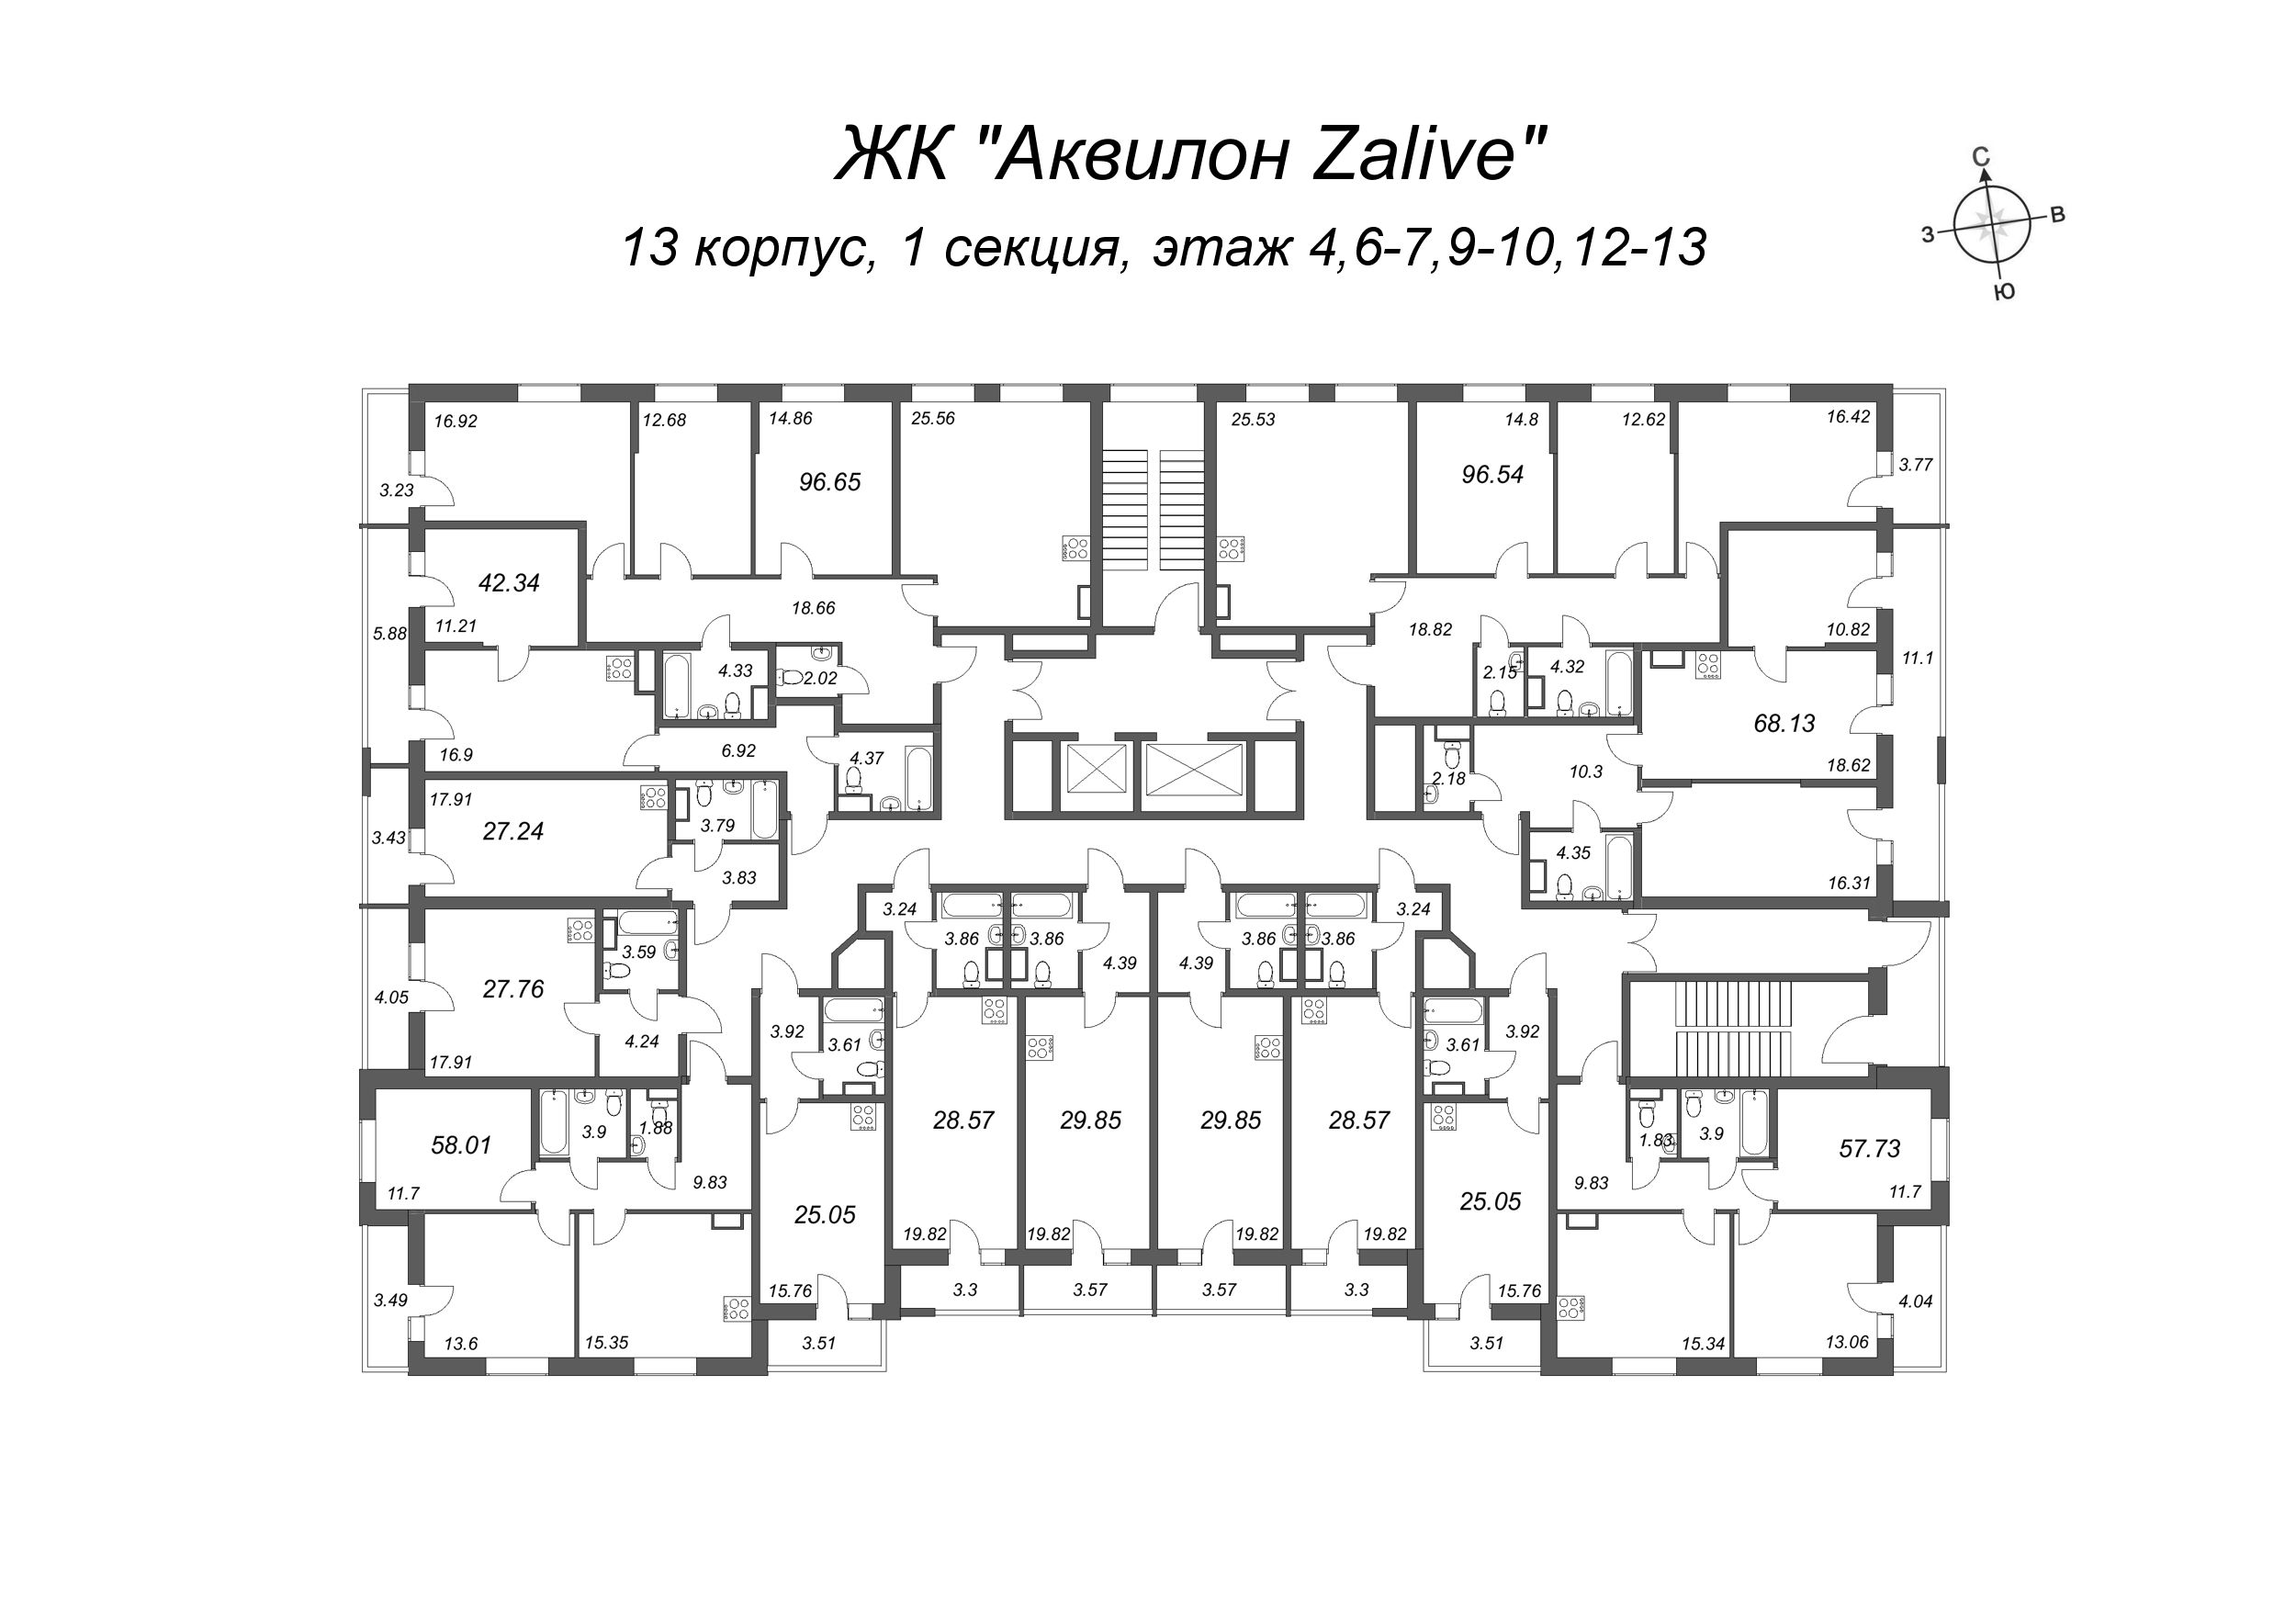 3-комнатная (Евро) квартира, 68.13 м² - планировка этажа